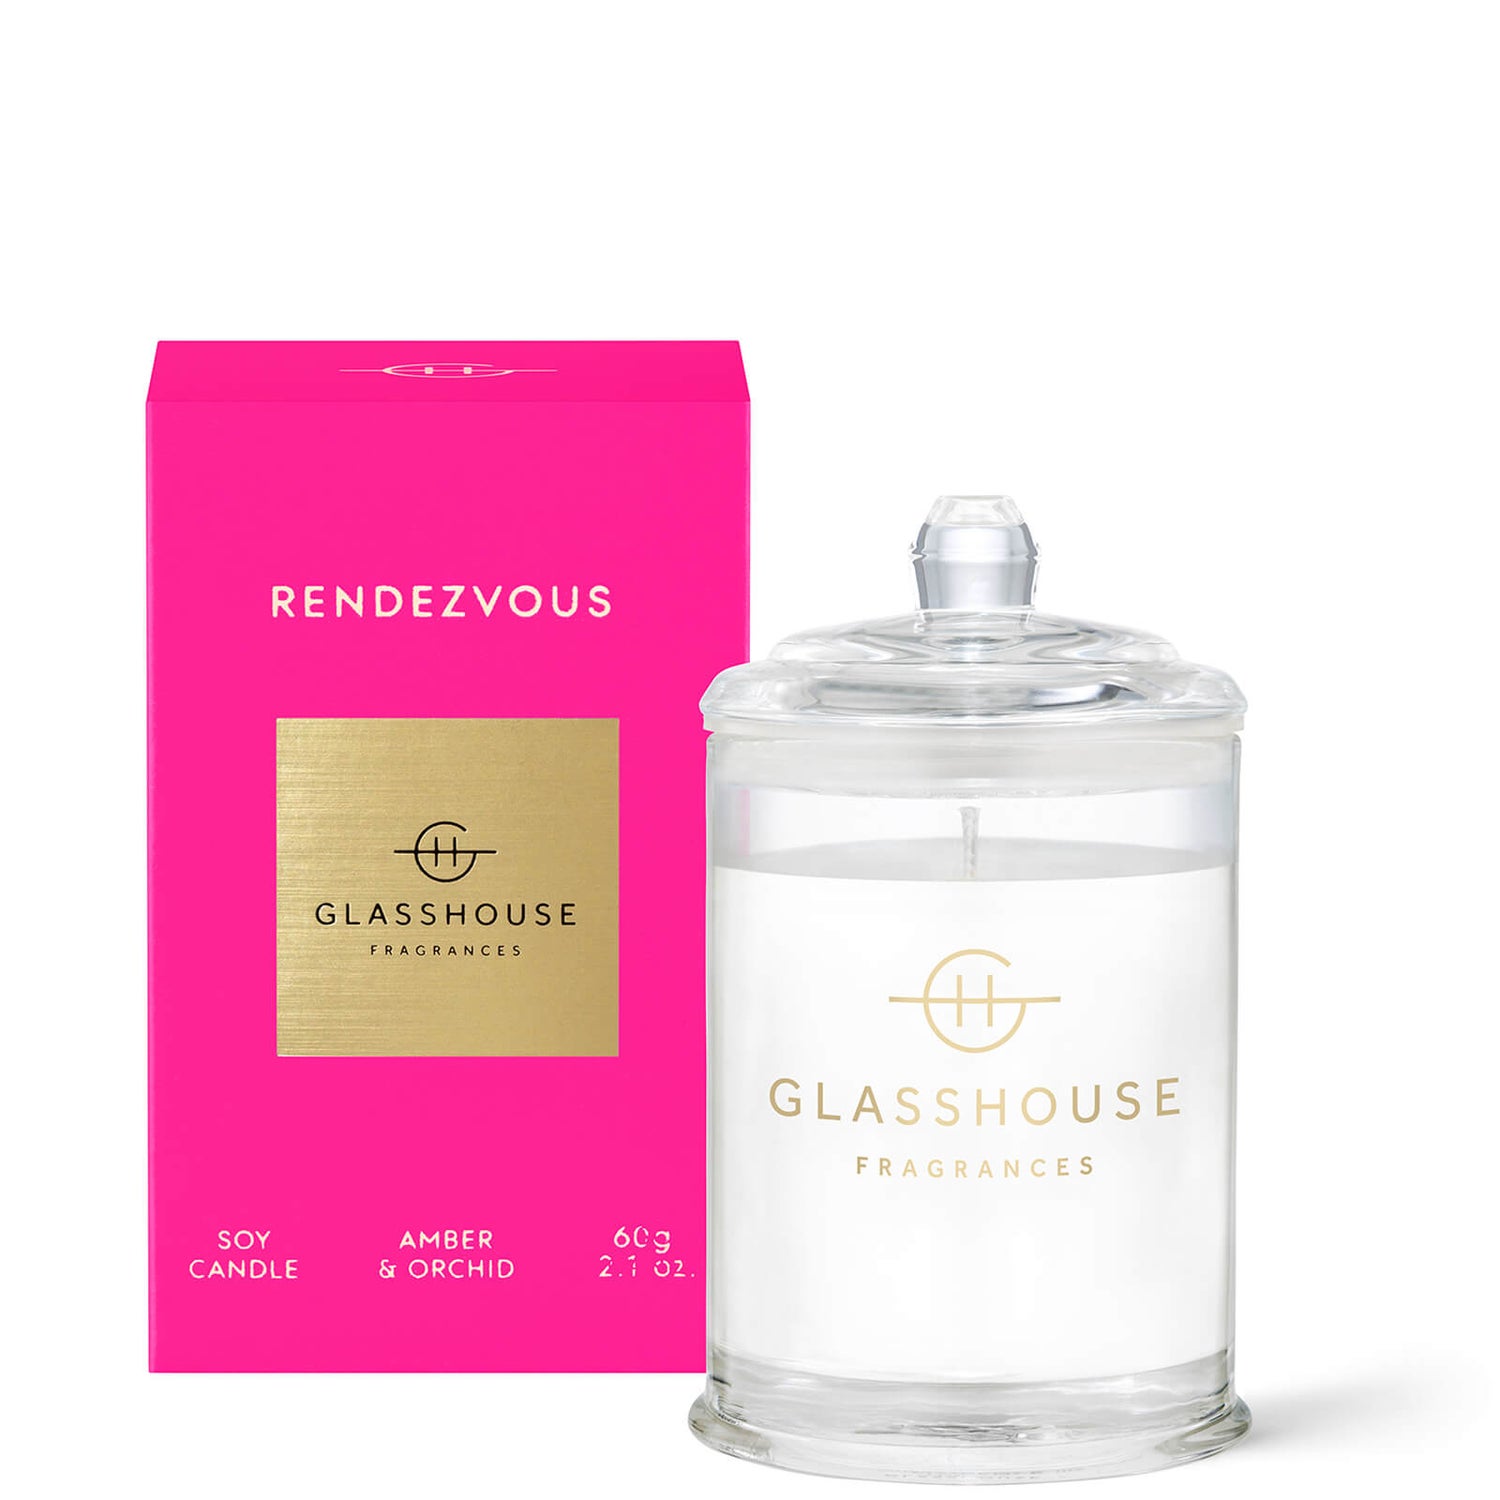 Glasshouse Fragrances Rendezvous Candle 60g